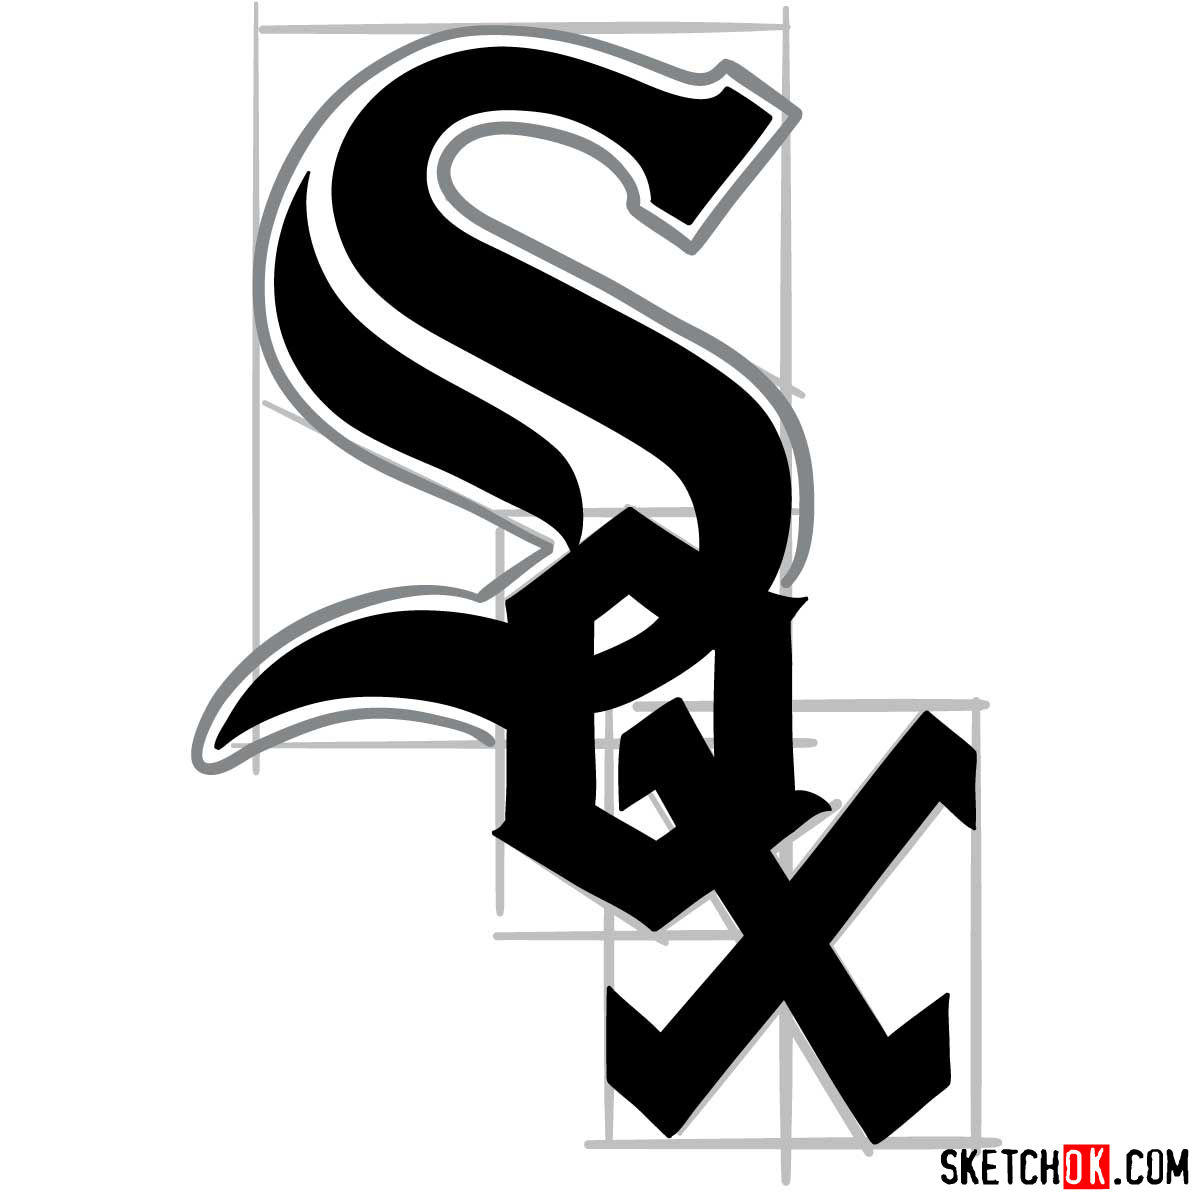 How to draw Chicago White Sox logo | MLB logos - step 11